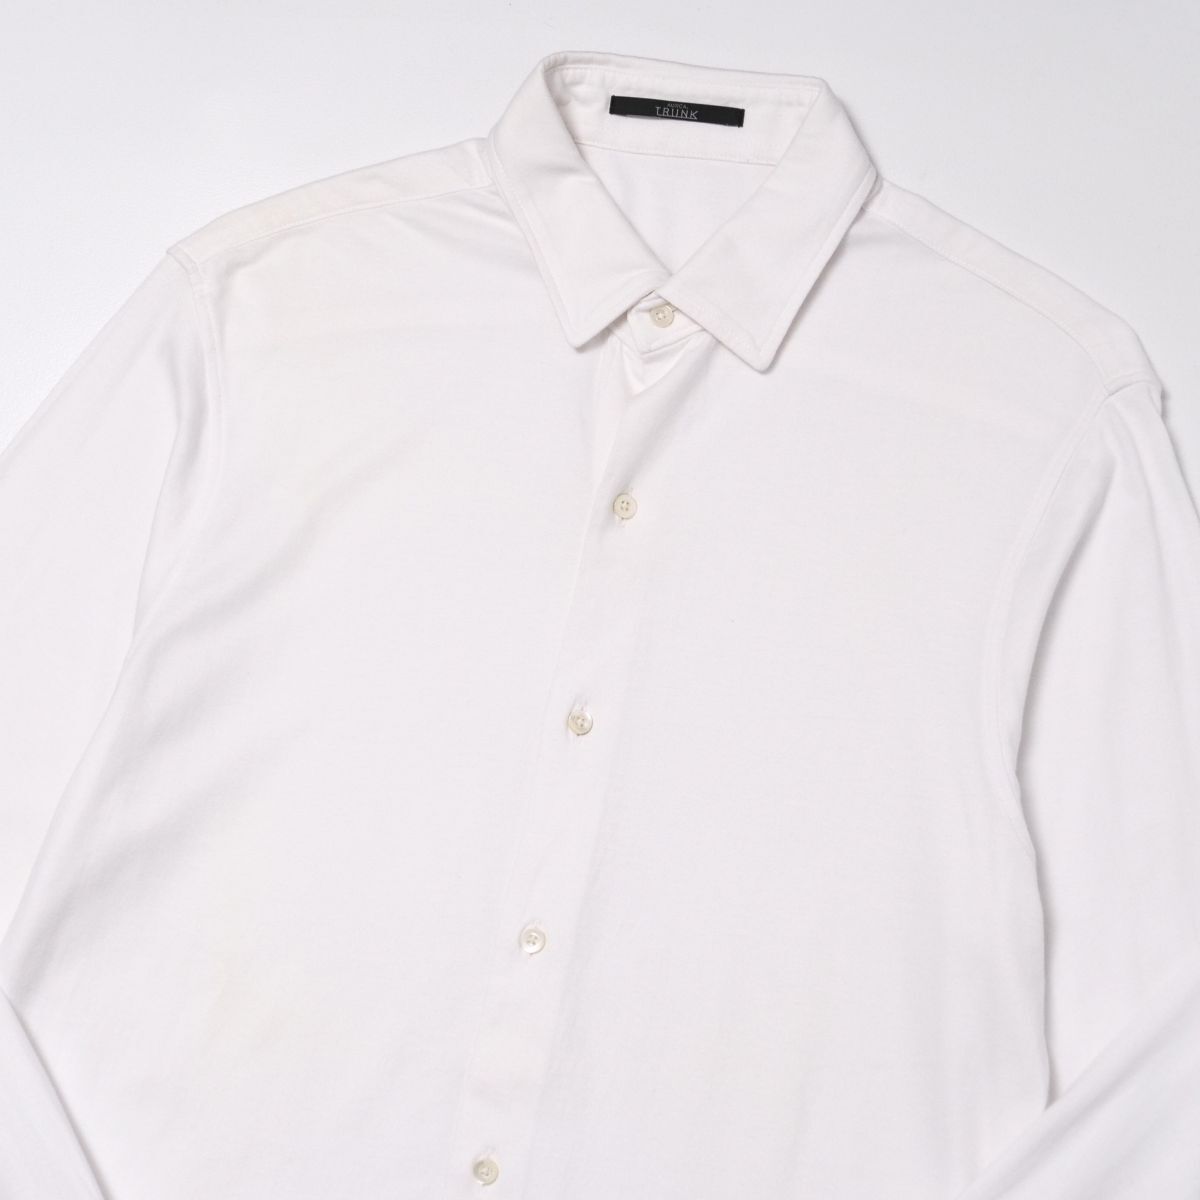 MF9254 AUXCA.TRUNK/オーカトランク*4点セット*ポロシャツ+長袖シャツ+クルーネックTシャツ+VネックTシャツ*ホワイト系*メンズ_画像6